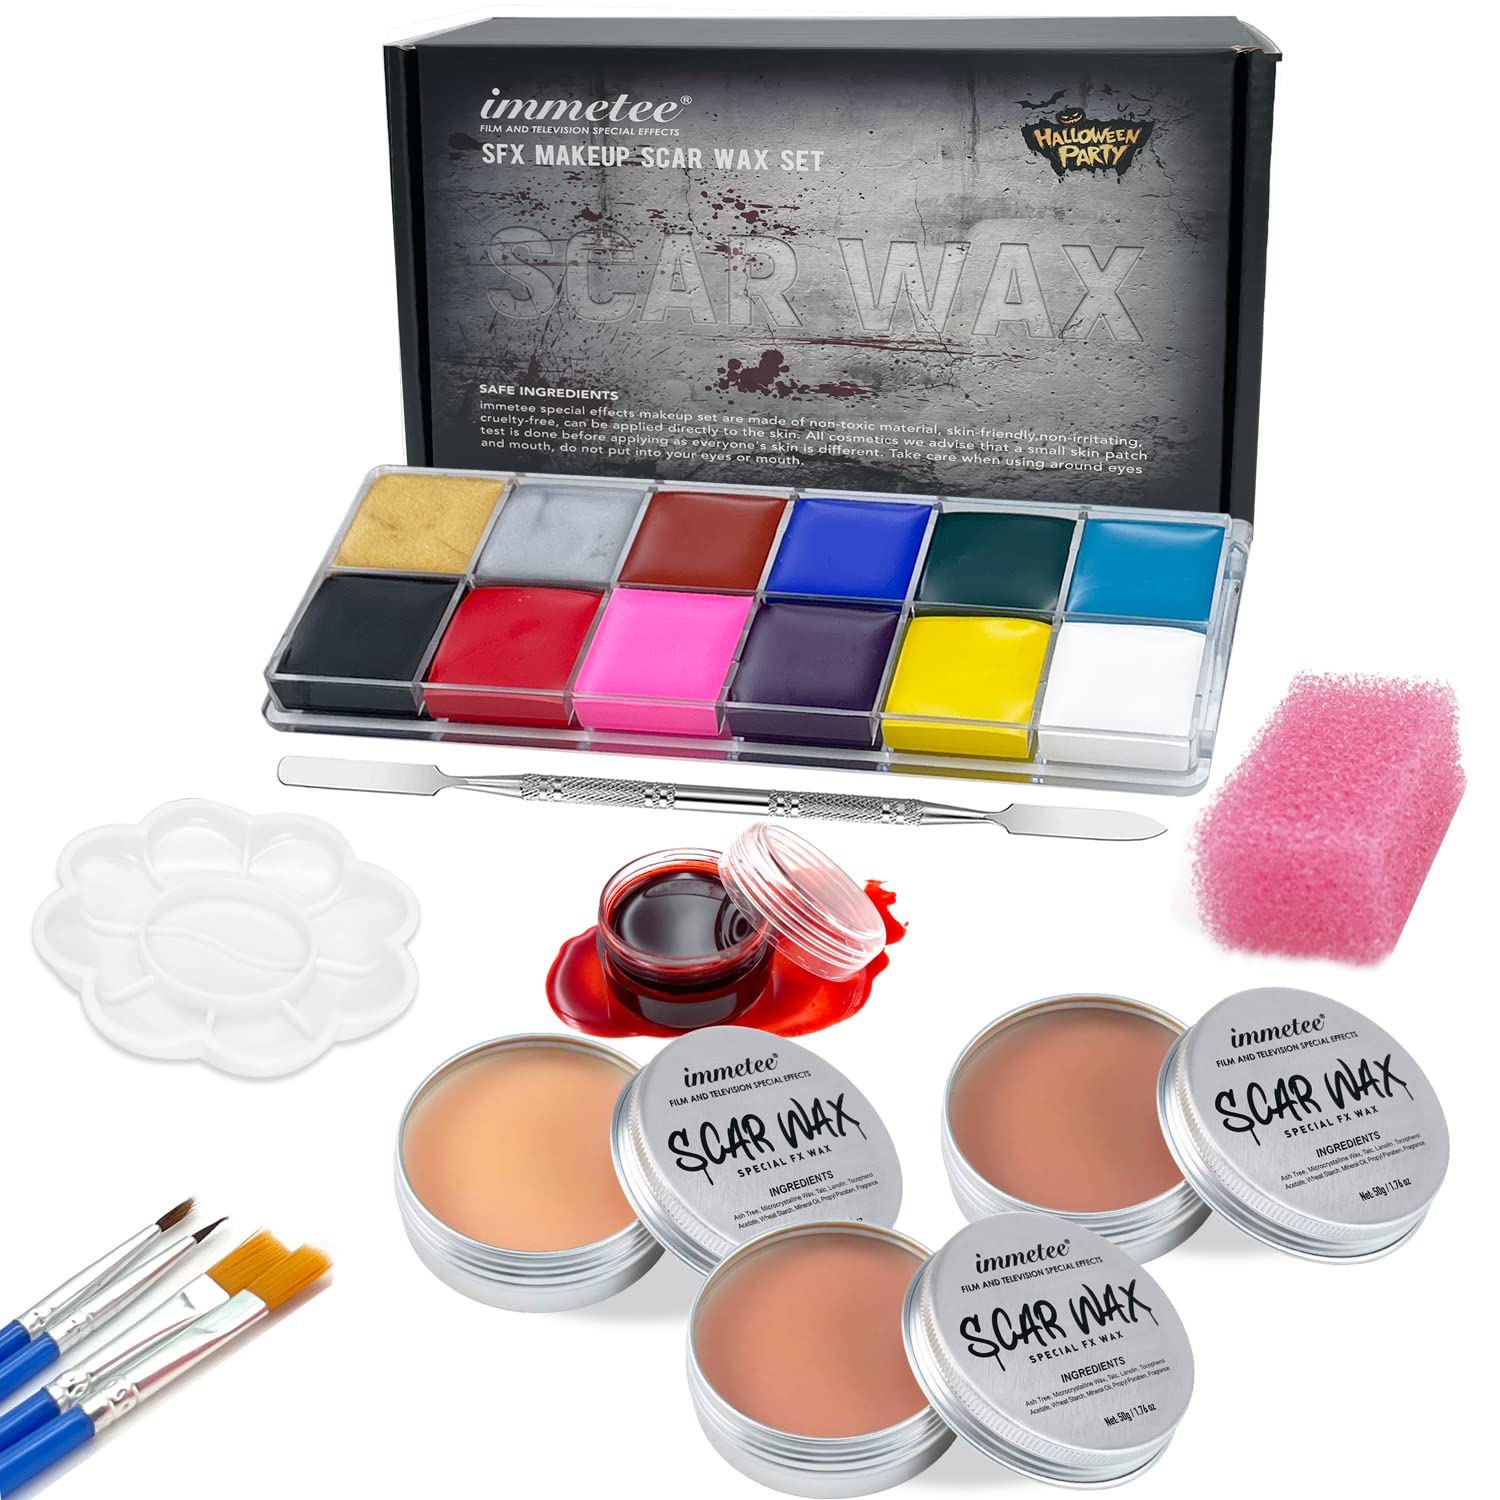 immetee Scar Wax SFX Makeup Kit, Face & Body Paint, Christmas